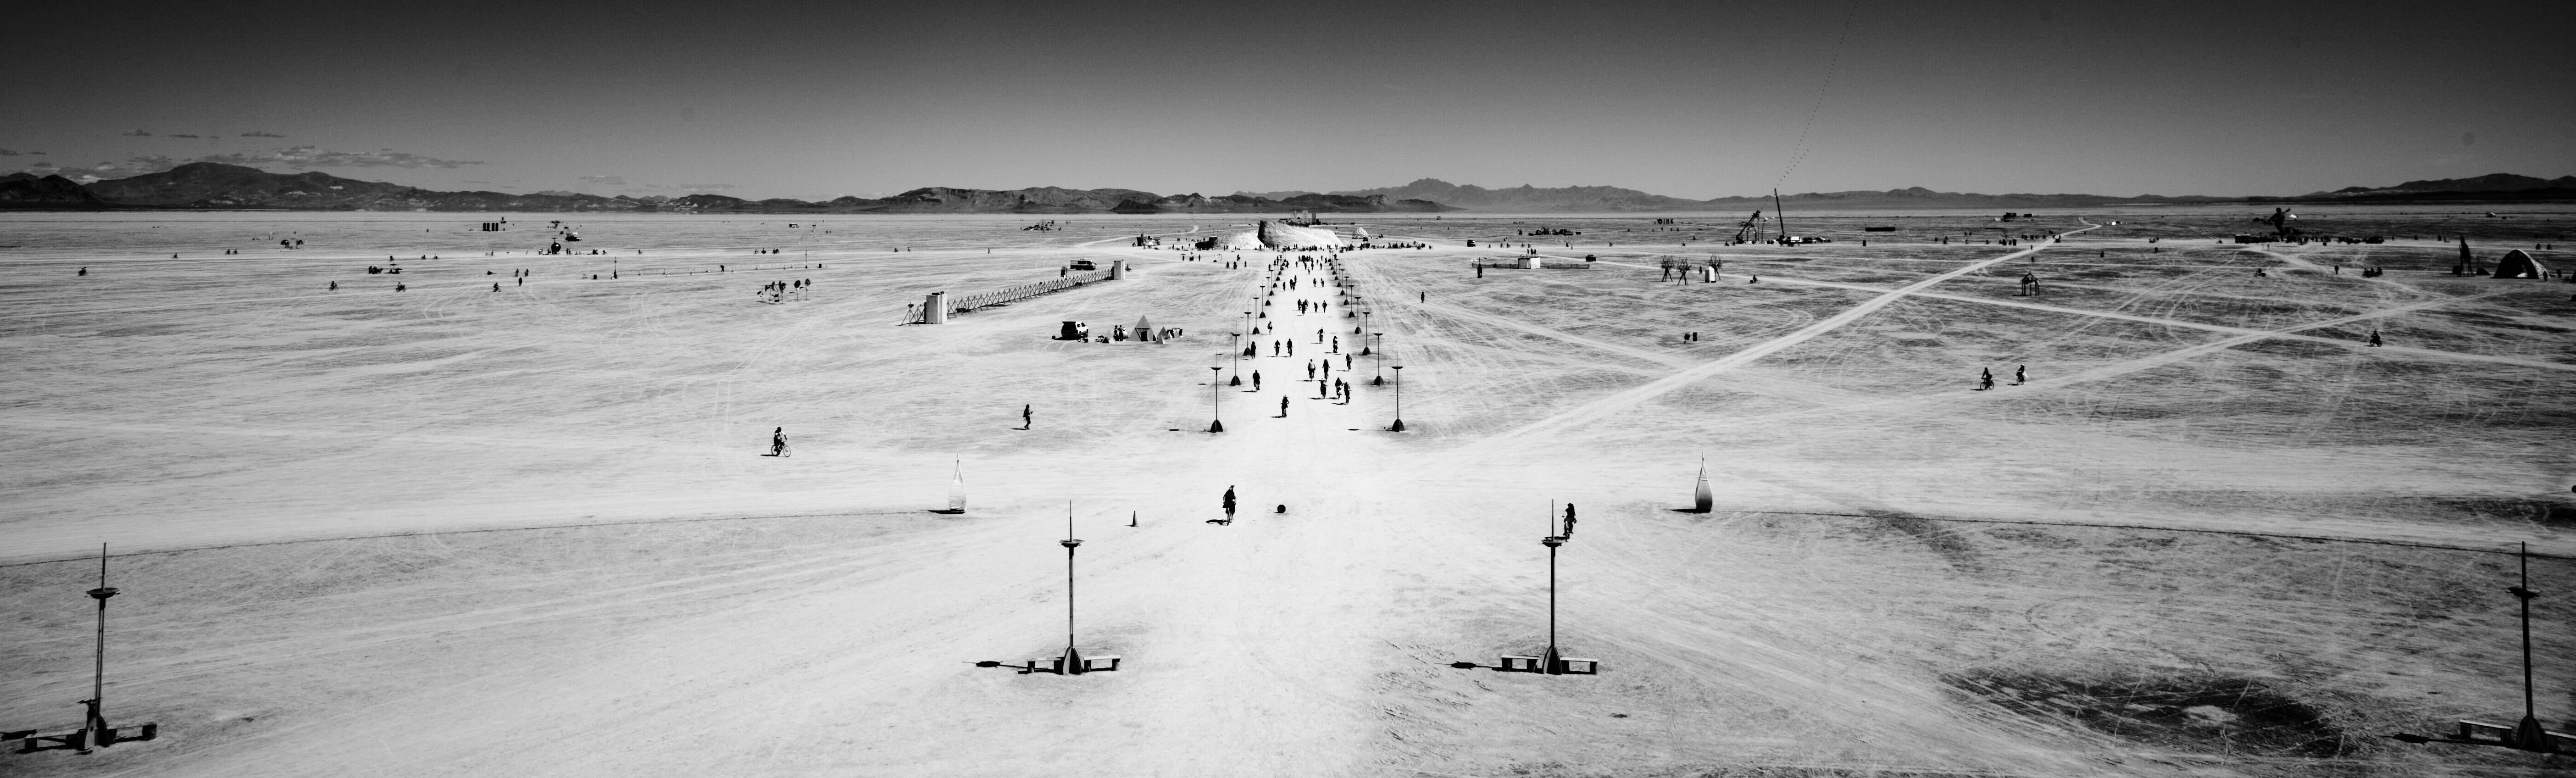 Tao Ruspoli Landscape Photograph – Vanishing Point; Caprarola und Black Rock City (Burning Man)